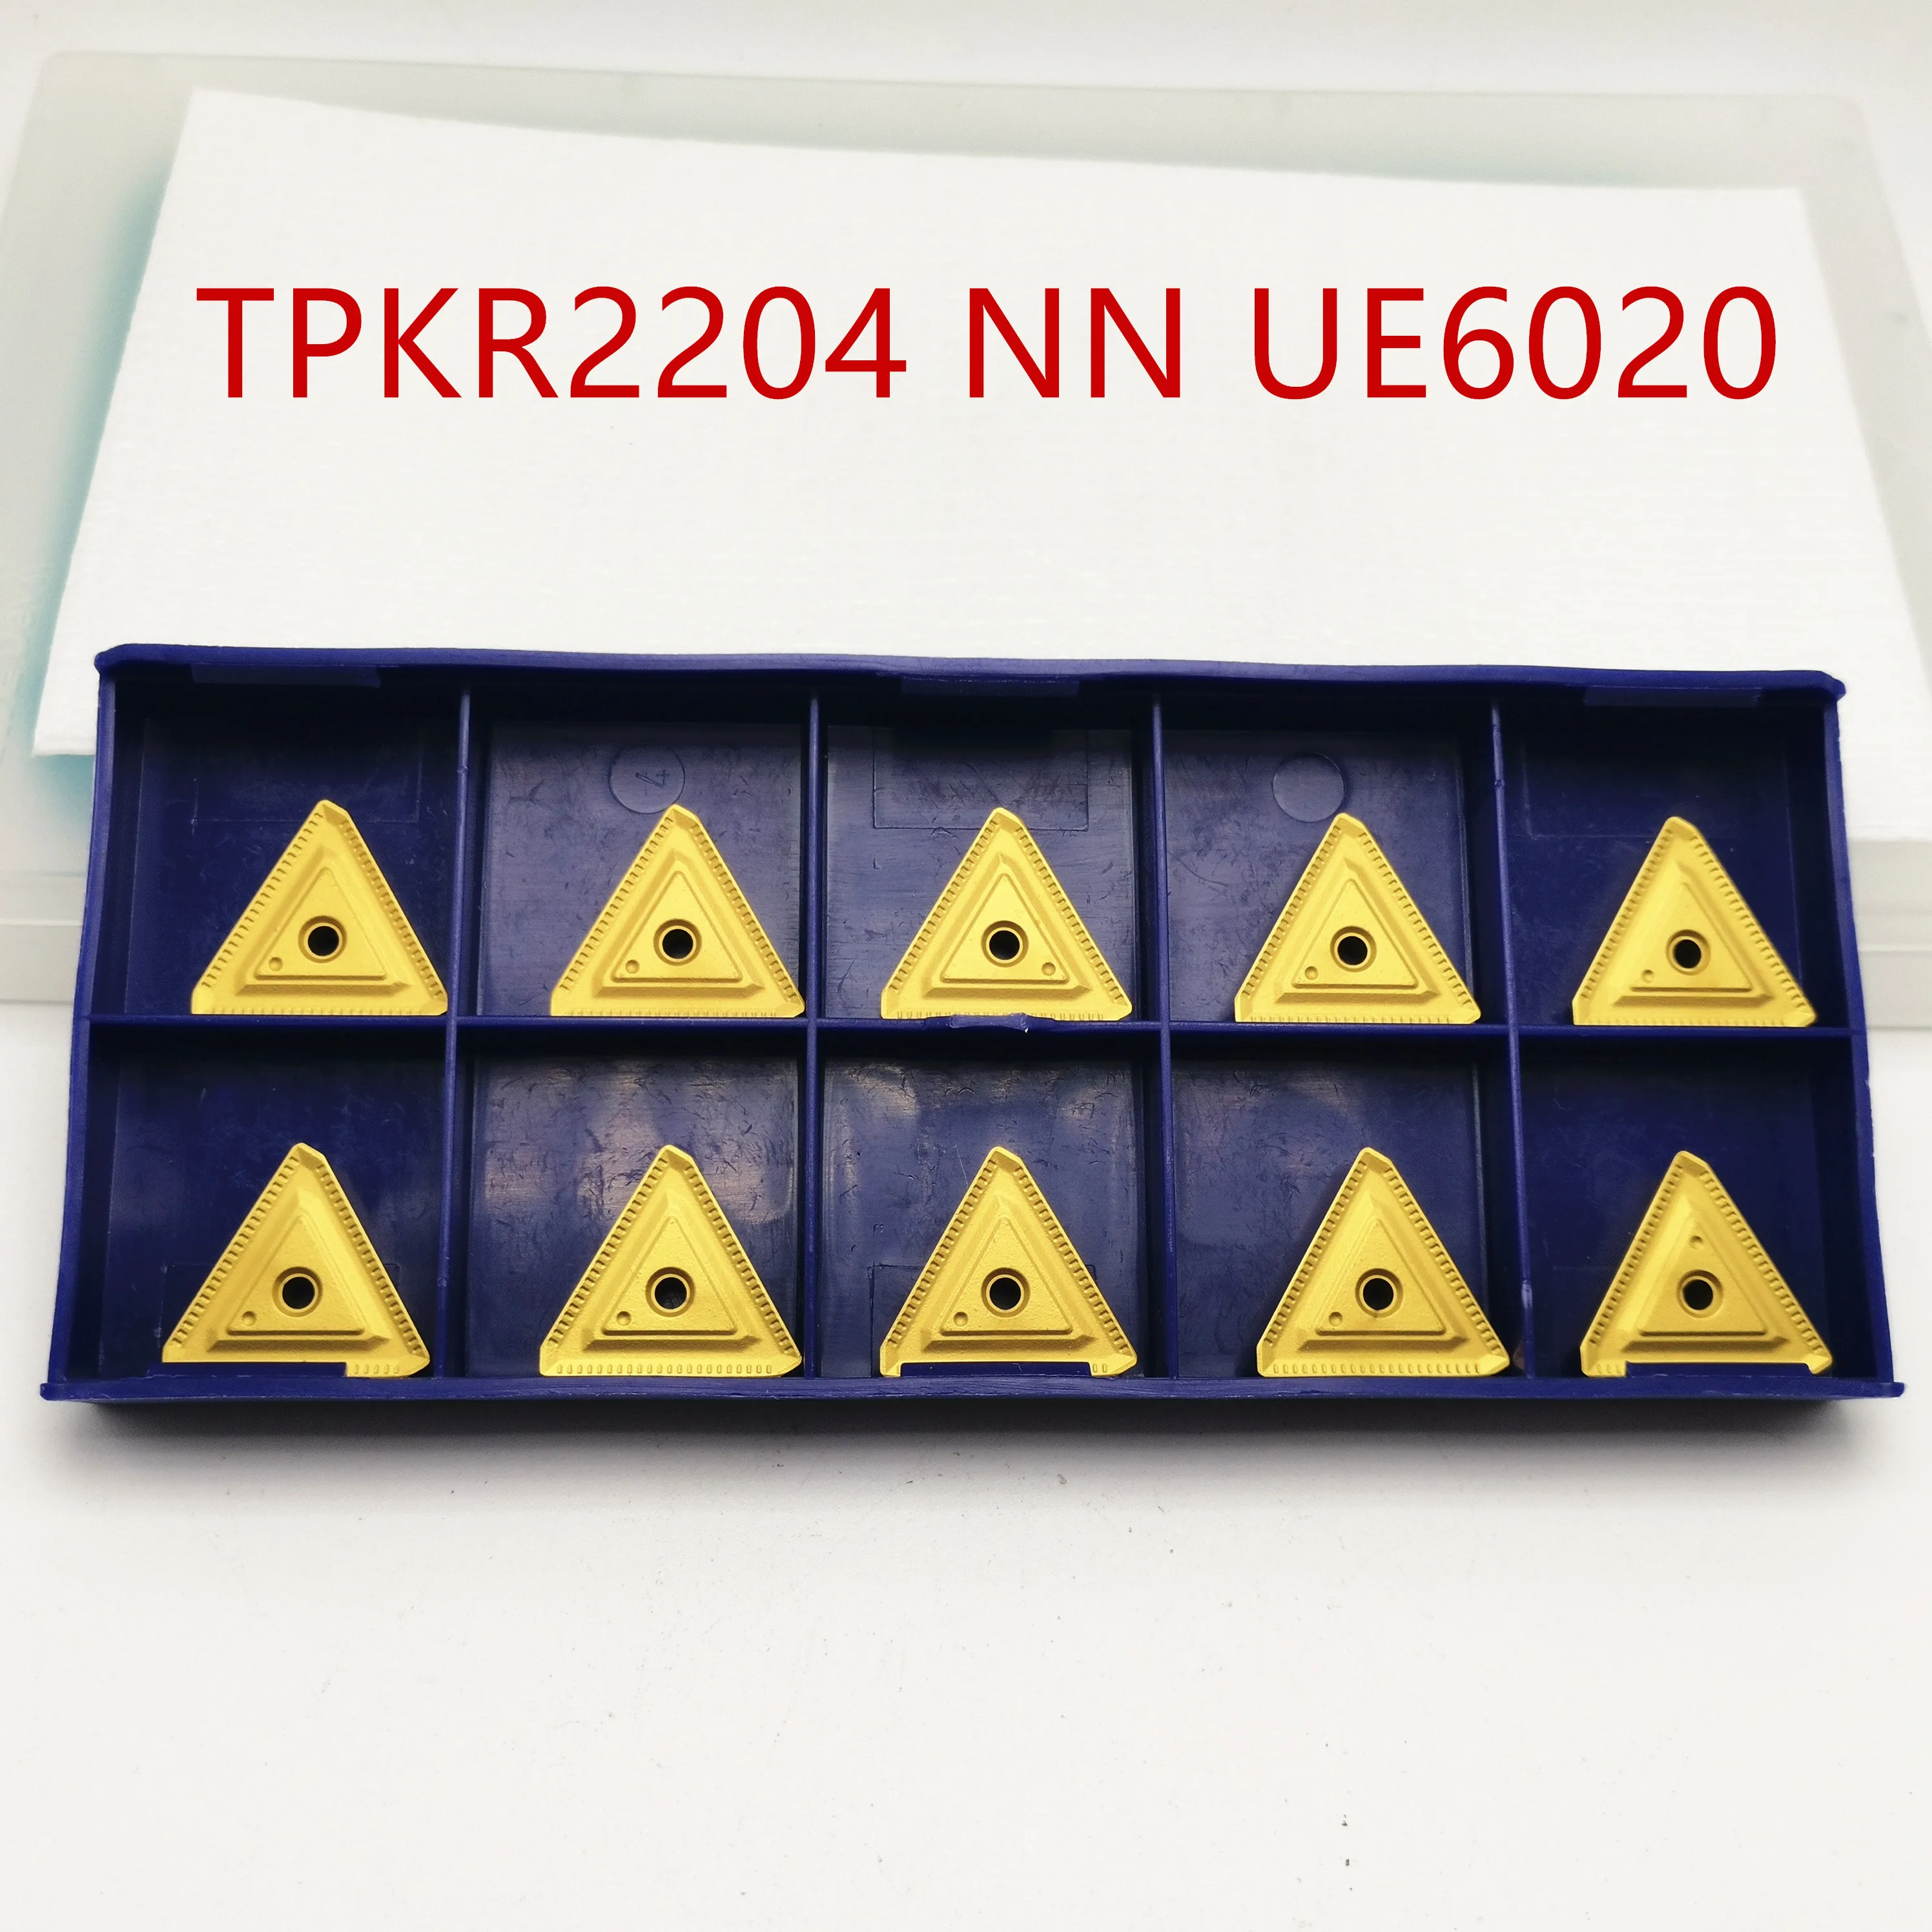 Твердосплавные TPKR2204 NN UE6020 твердосплавные вставные фрезерные инструменты токарные инструменты Токарный резак TPKR 2204 токарный нож